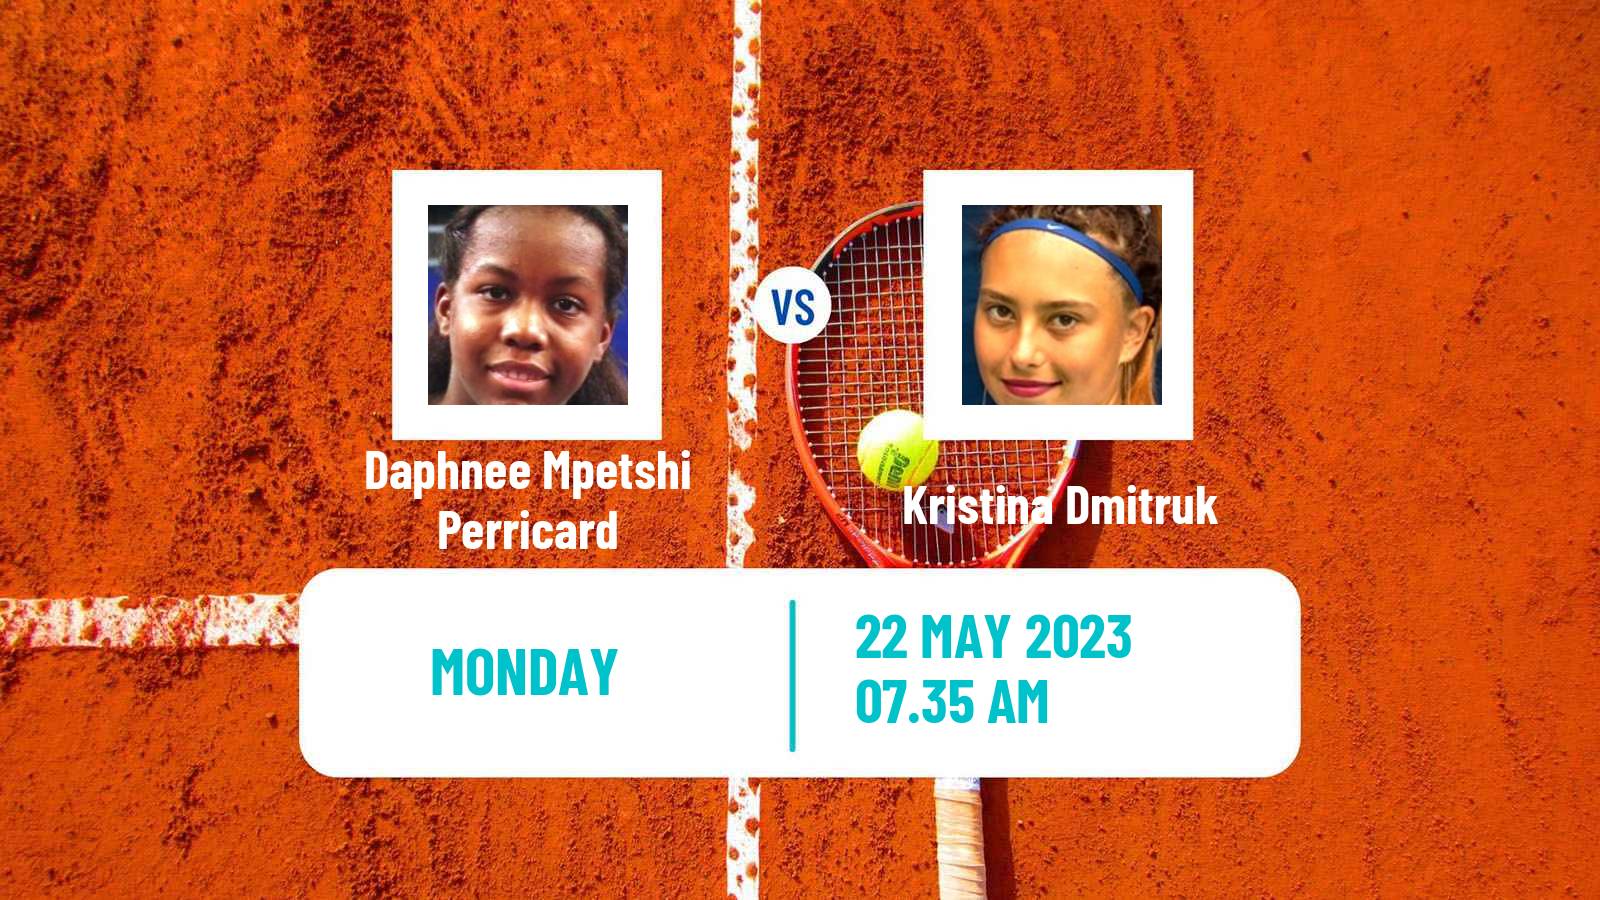 Tennis WTA Roland Garros Daphnee Mpetshi Perricard - Kristina Dmitruk